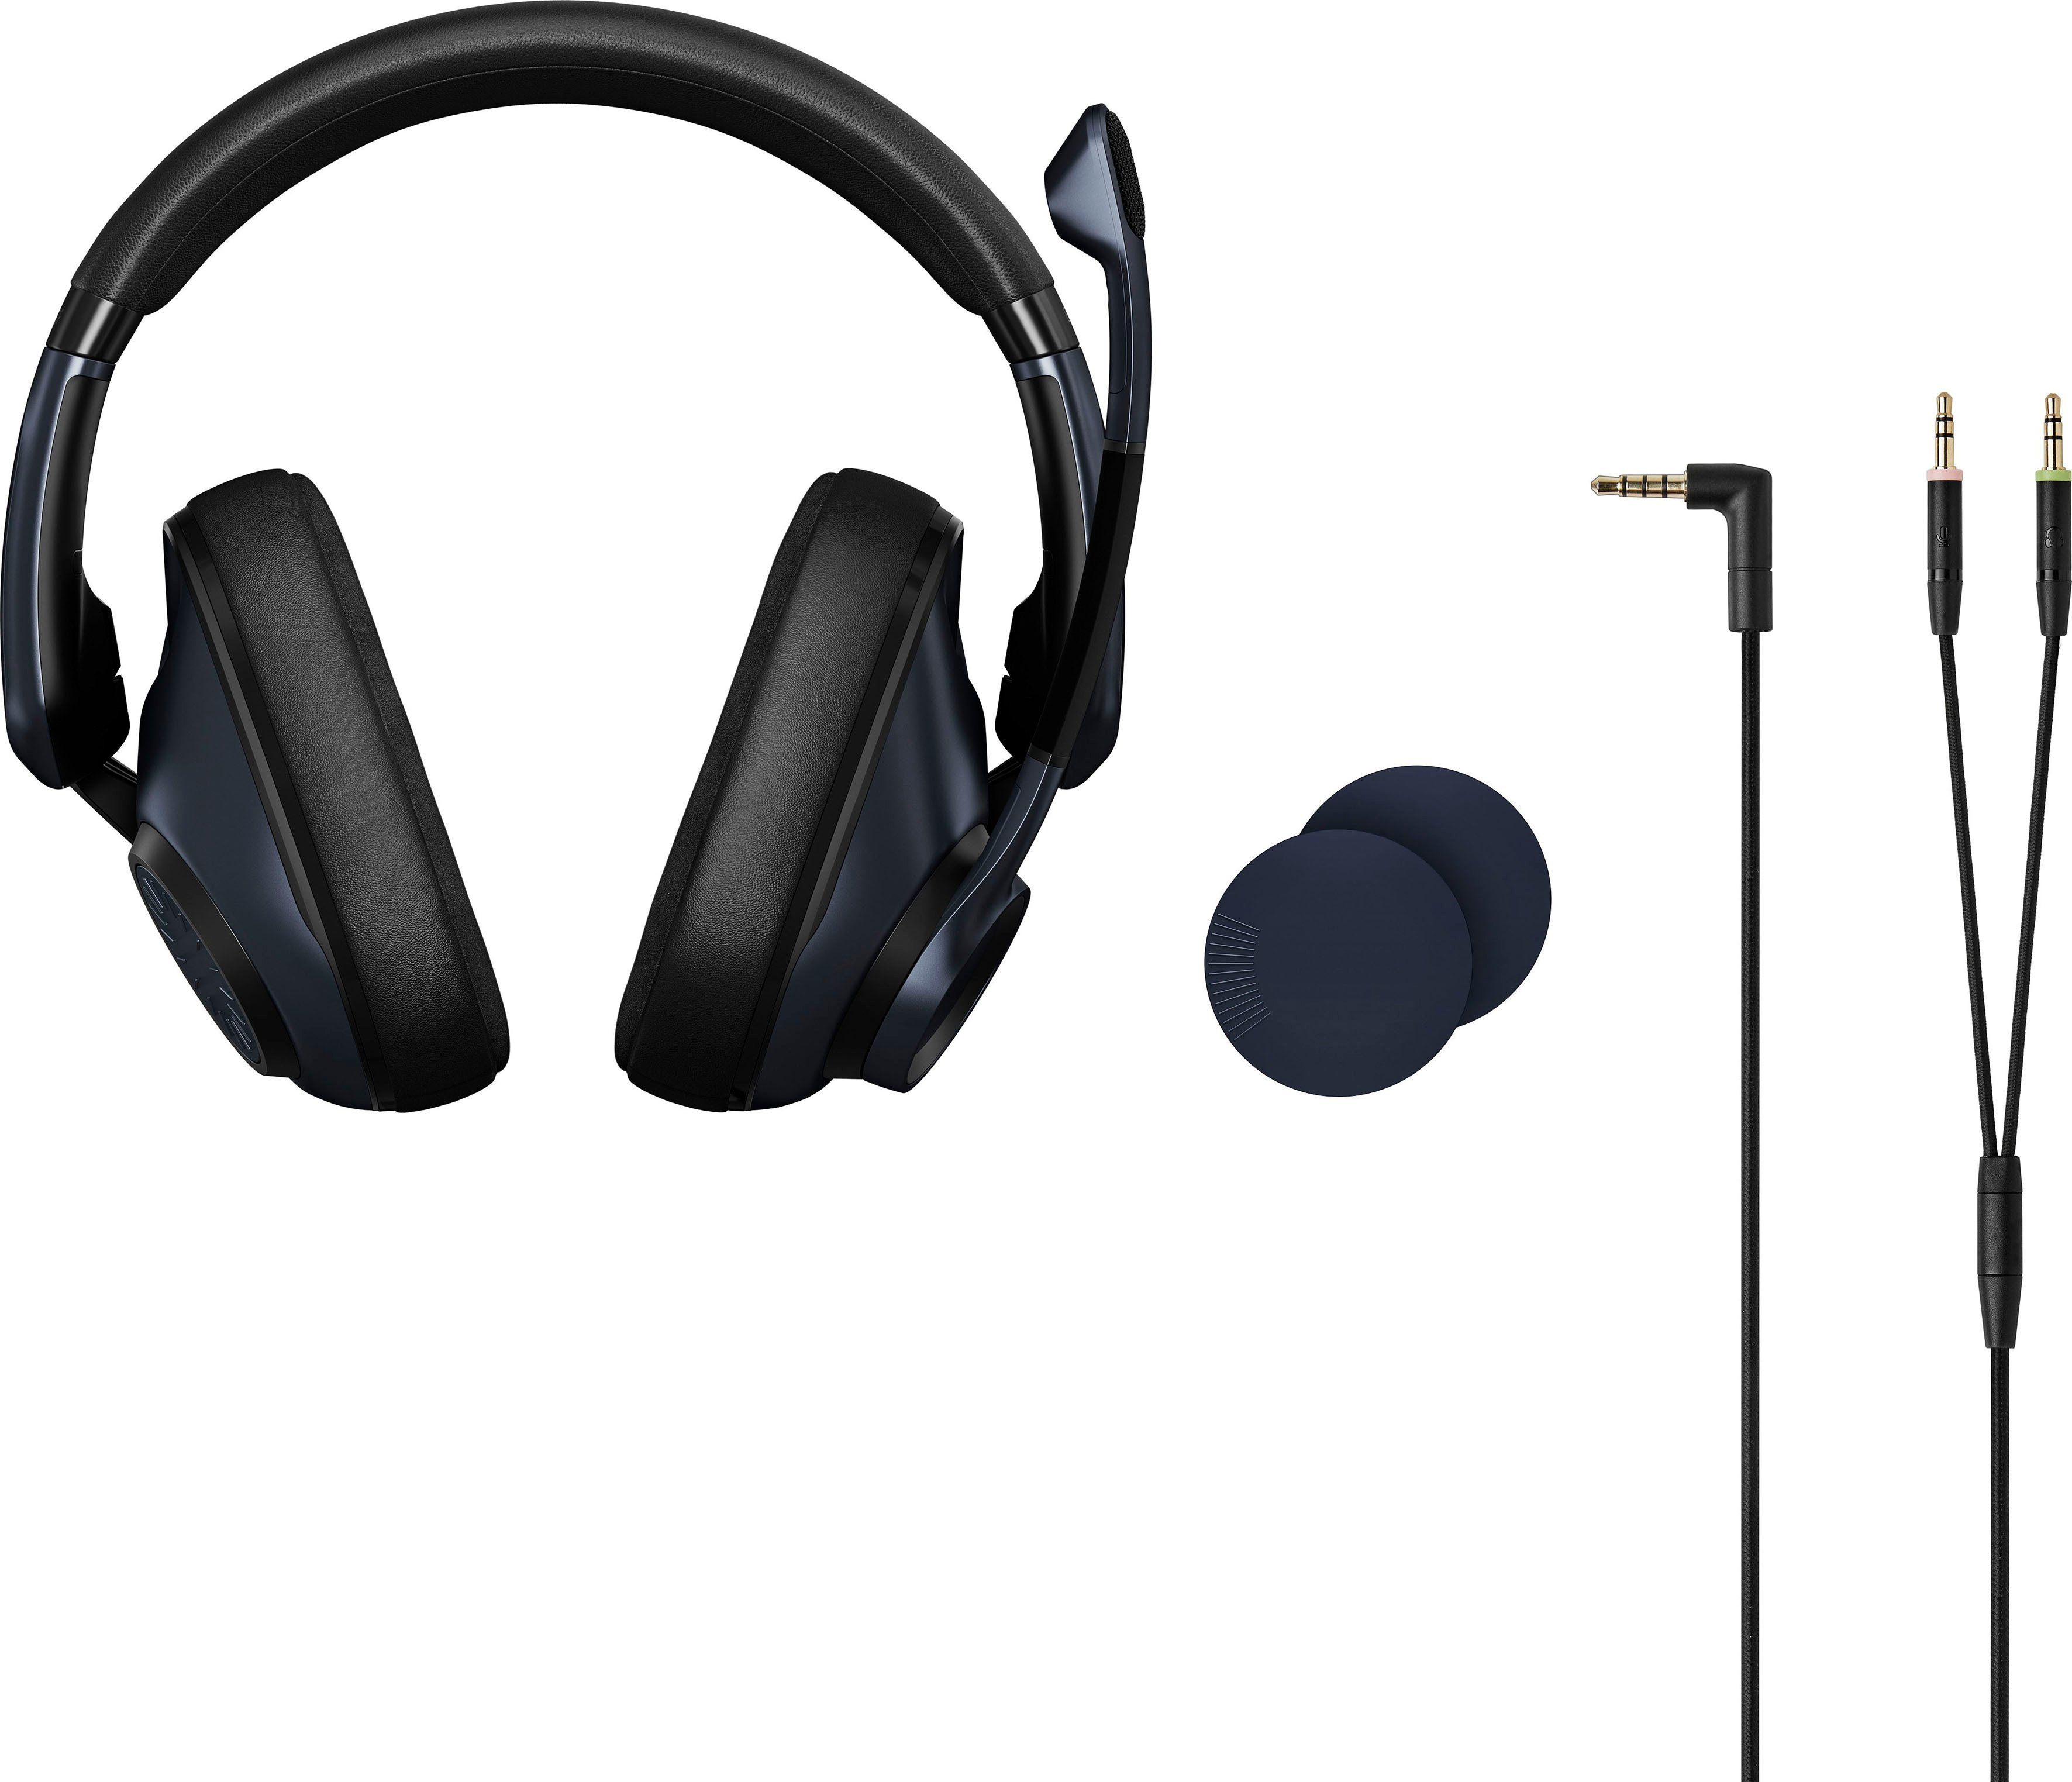 Closed Acoustic H6 EPOS schwarz Pro Gaming-Headset